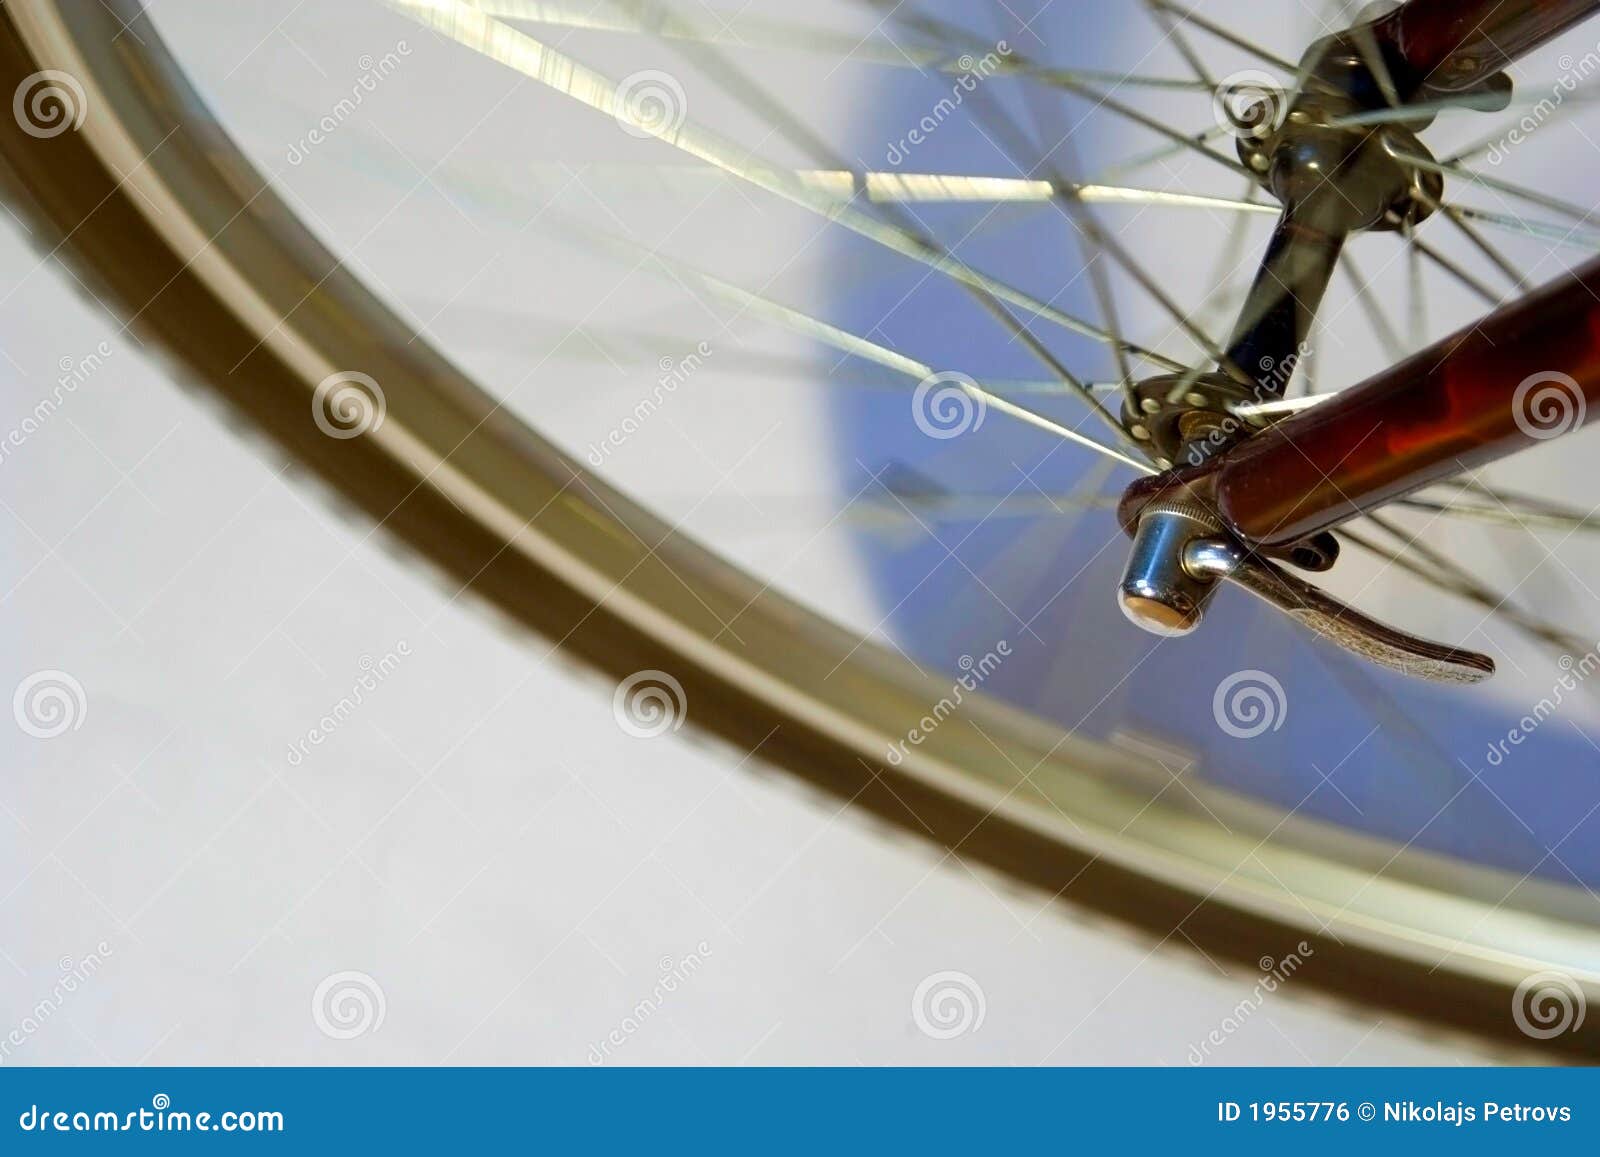 4,699 Bike Spokes Wheel Stock Photos - Free & Royalty-Free Stock Photos  from Dreamstime